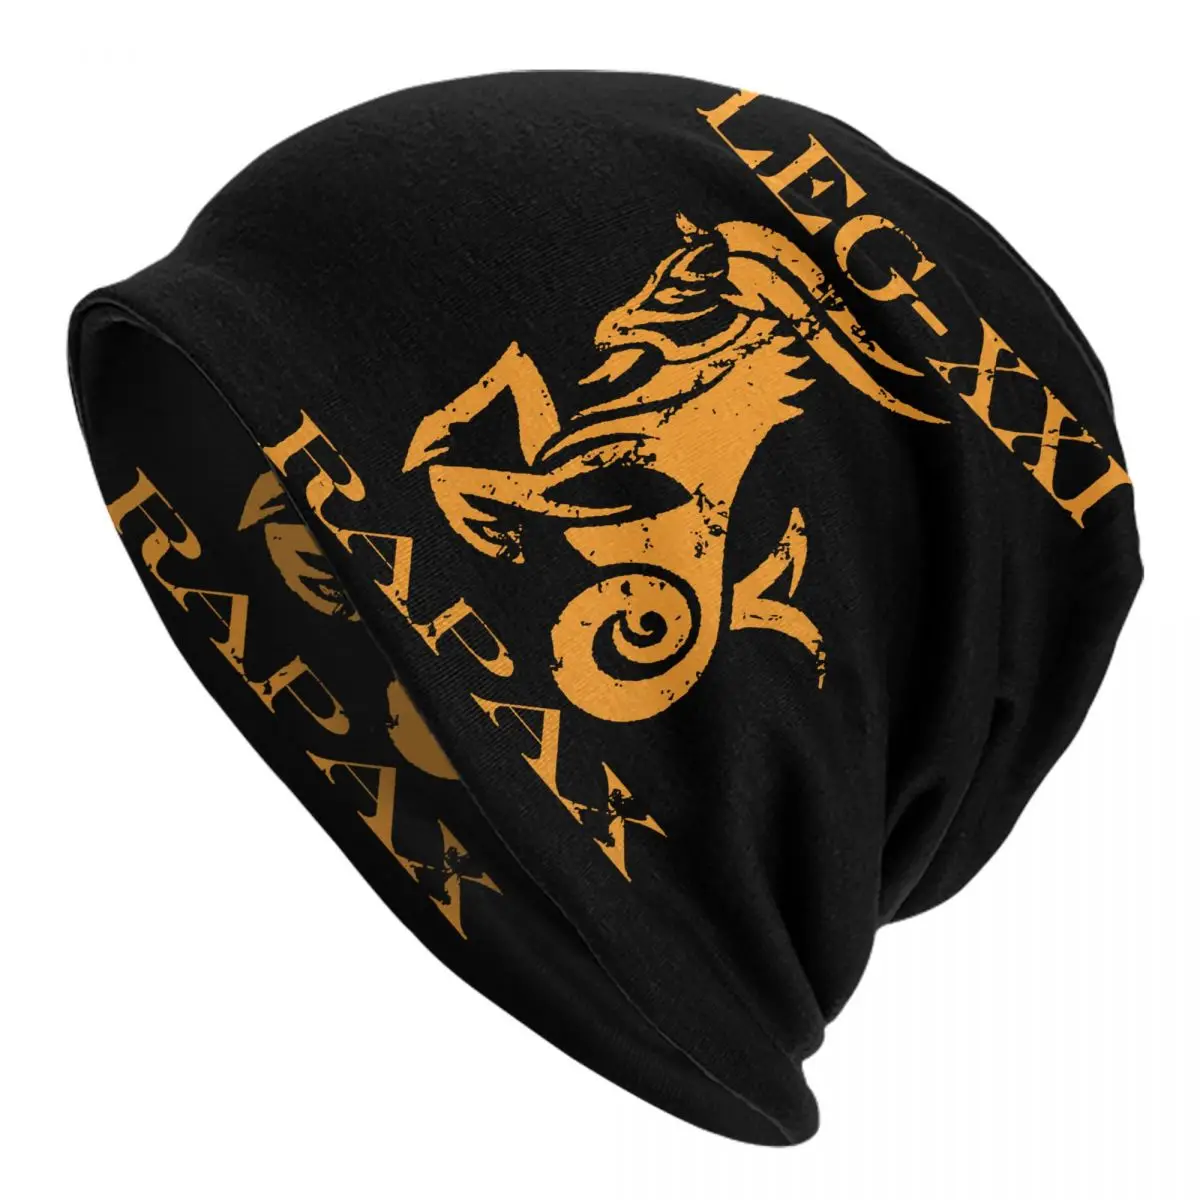 Ncient Rome -Legio XXI Rapax Adult Men's Women's Knit Hat Keep warm winter Funny knitted hat